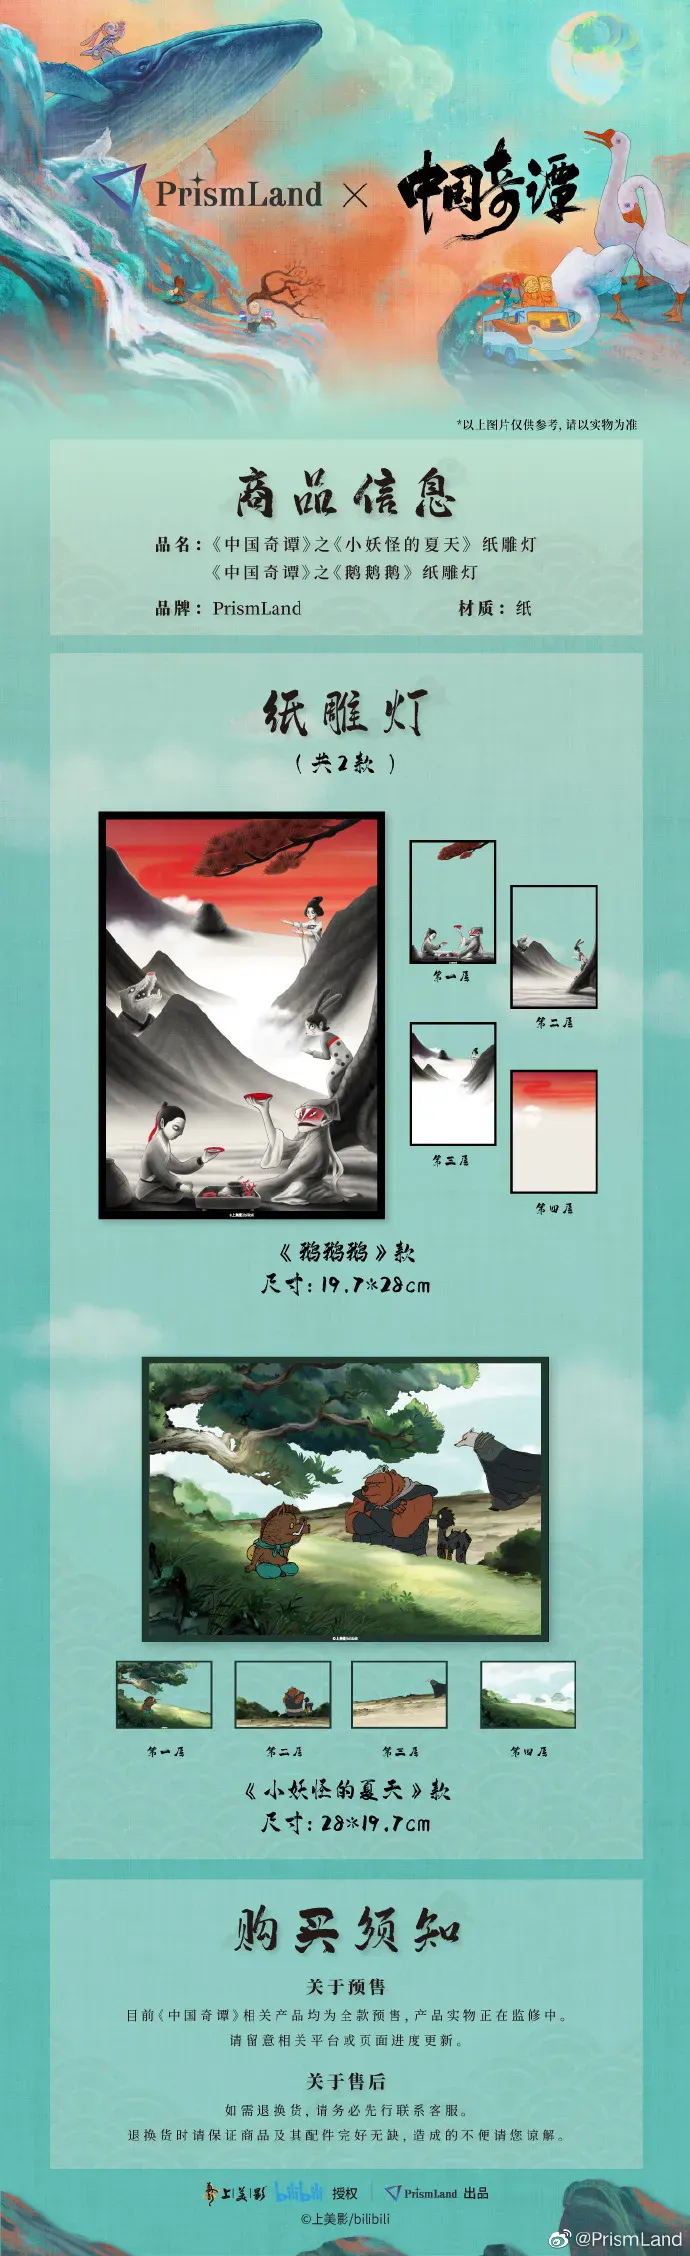 Original Merchandise China奇谭 image document